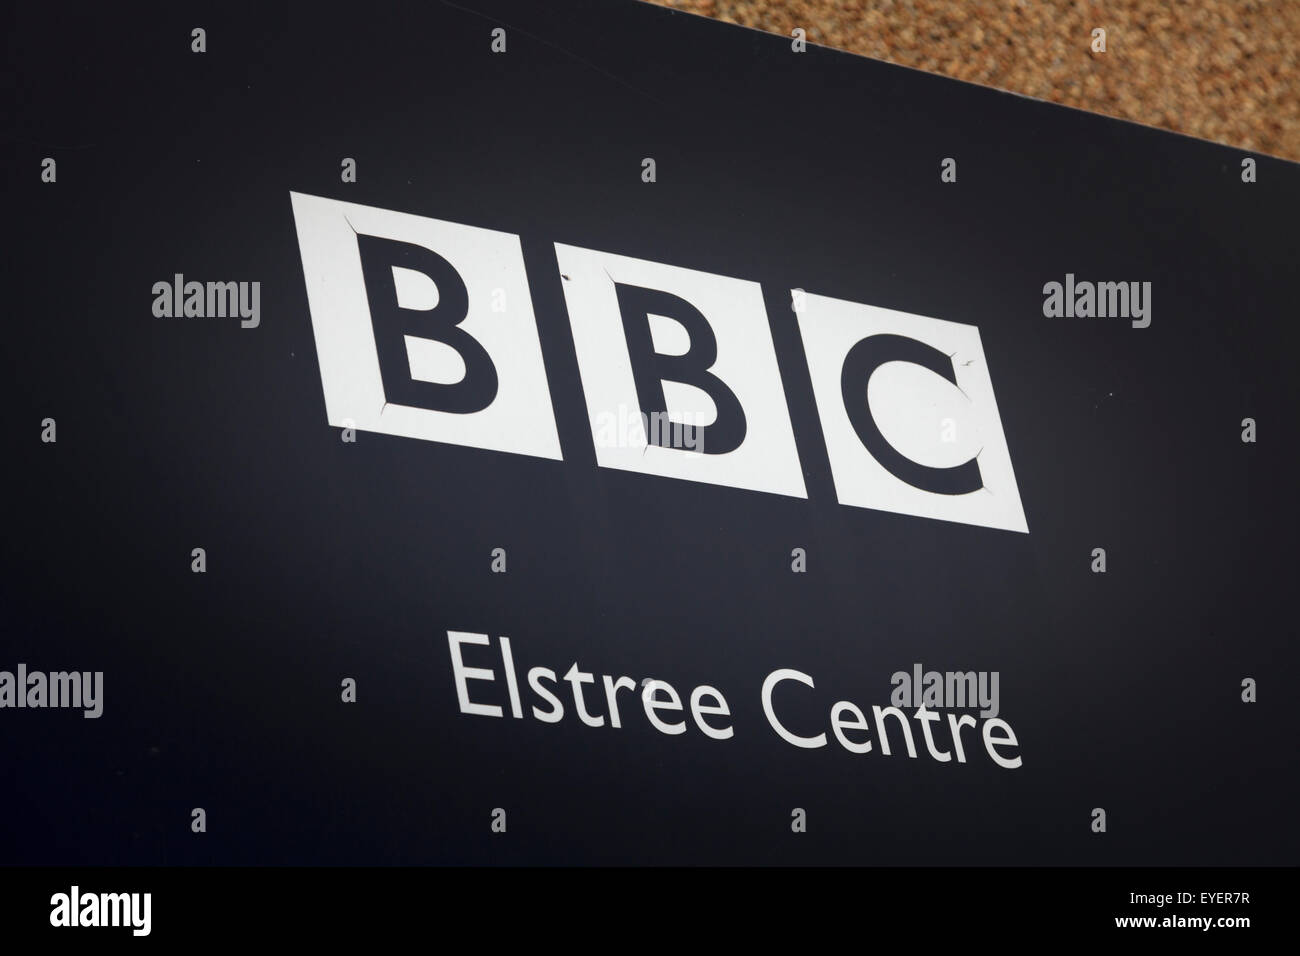 BBC Elstree Studios entrance sign Stock Photo